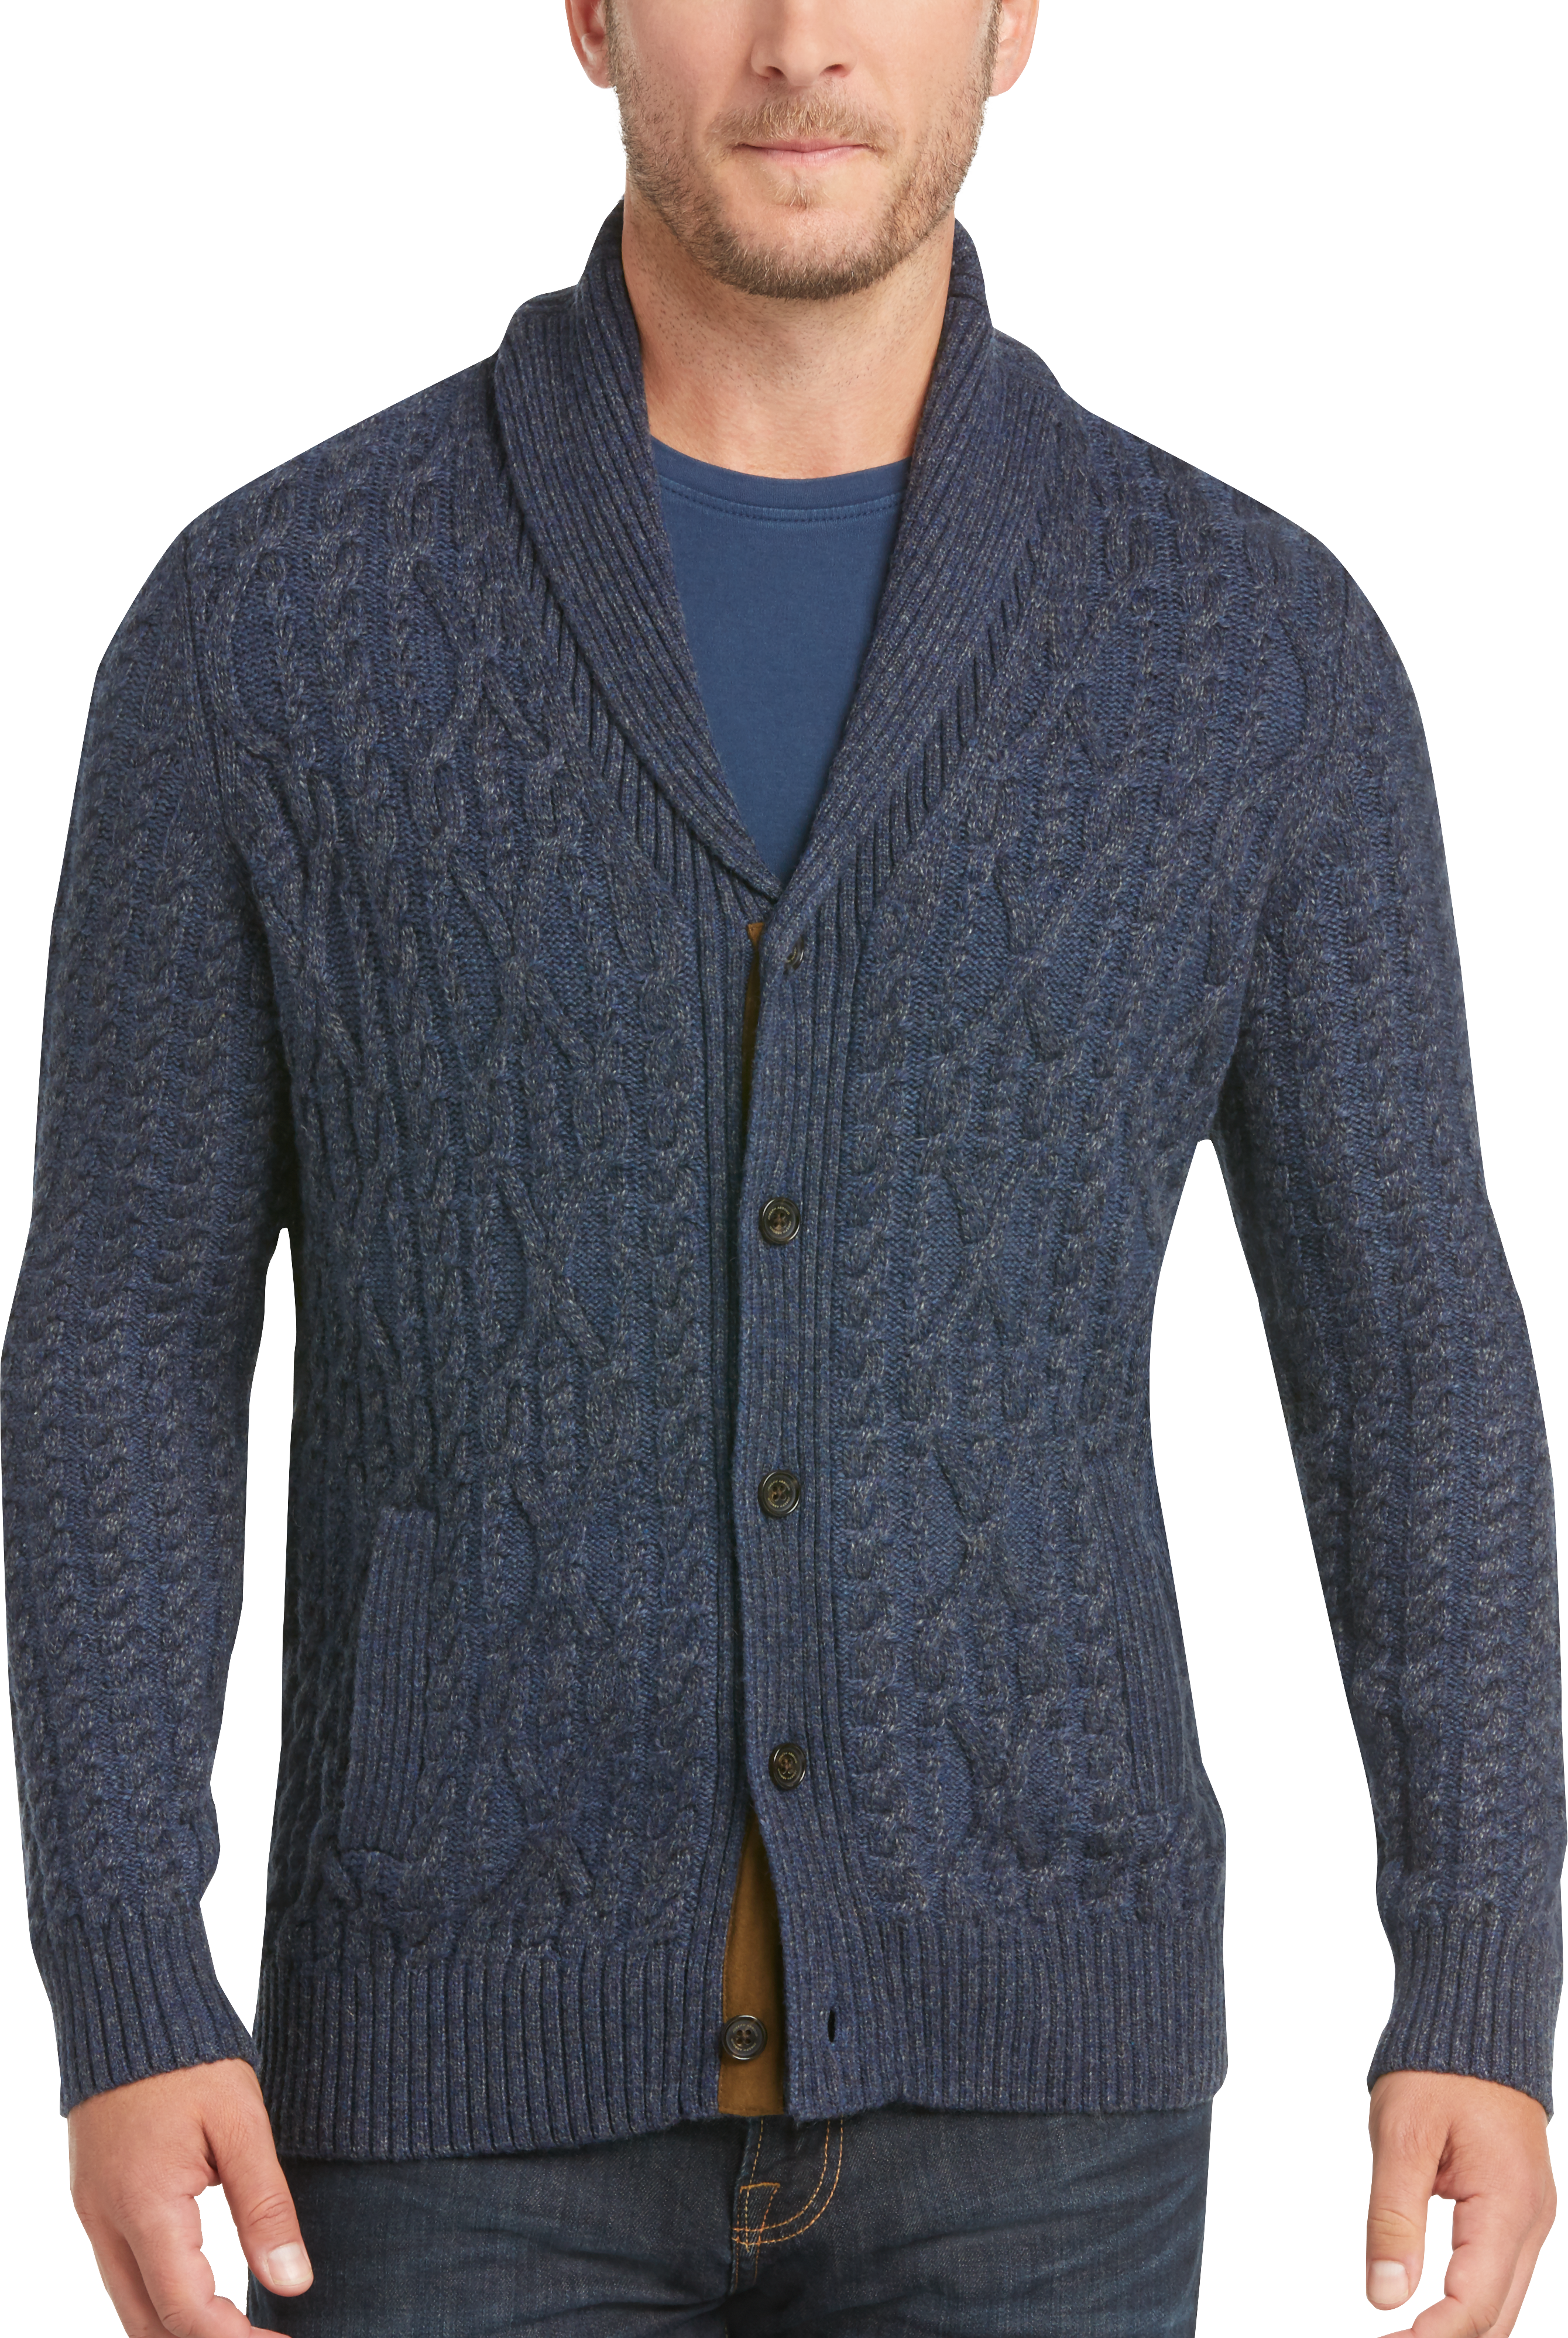 Men's Sweaters - Polo, Button up, Turtlenecks | Men's Wearhouse